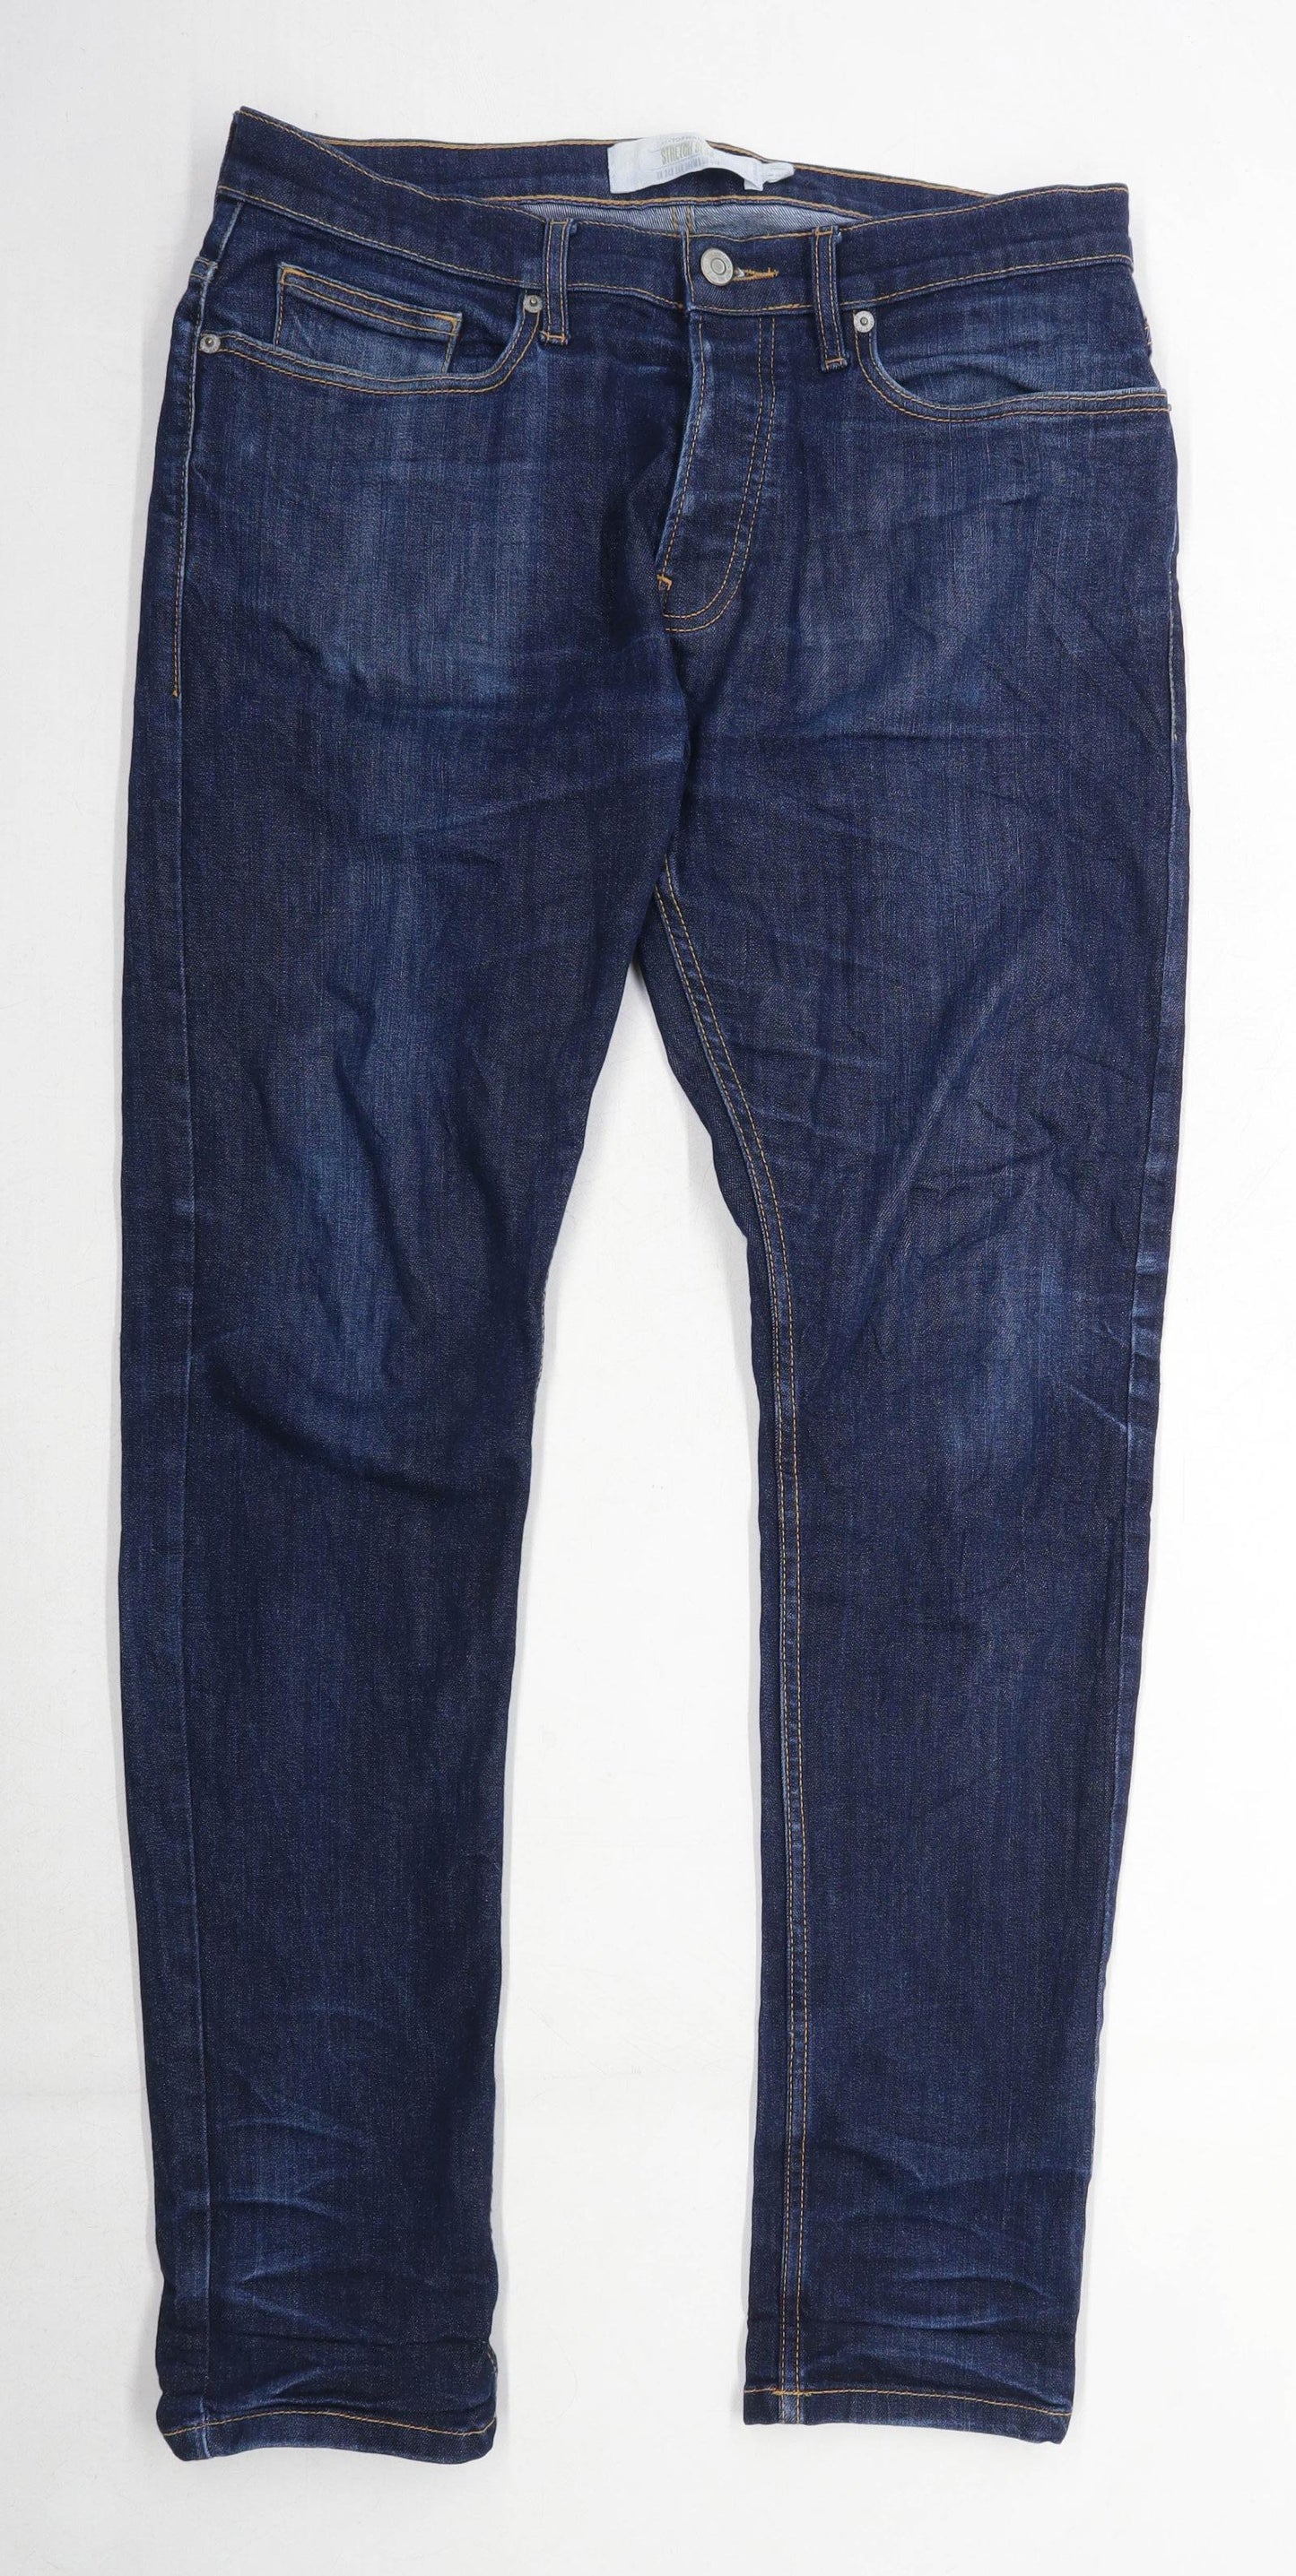 Topman Mens Blue Denim Jeans Size W34/L30